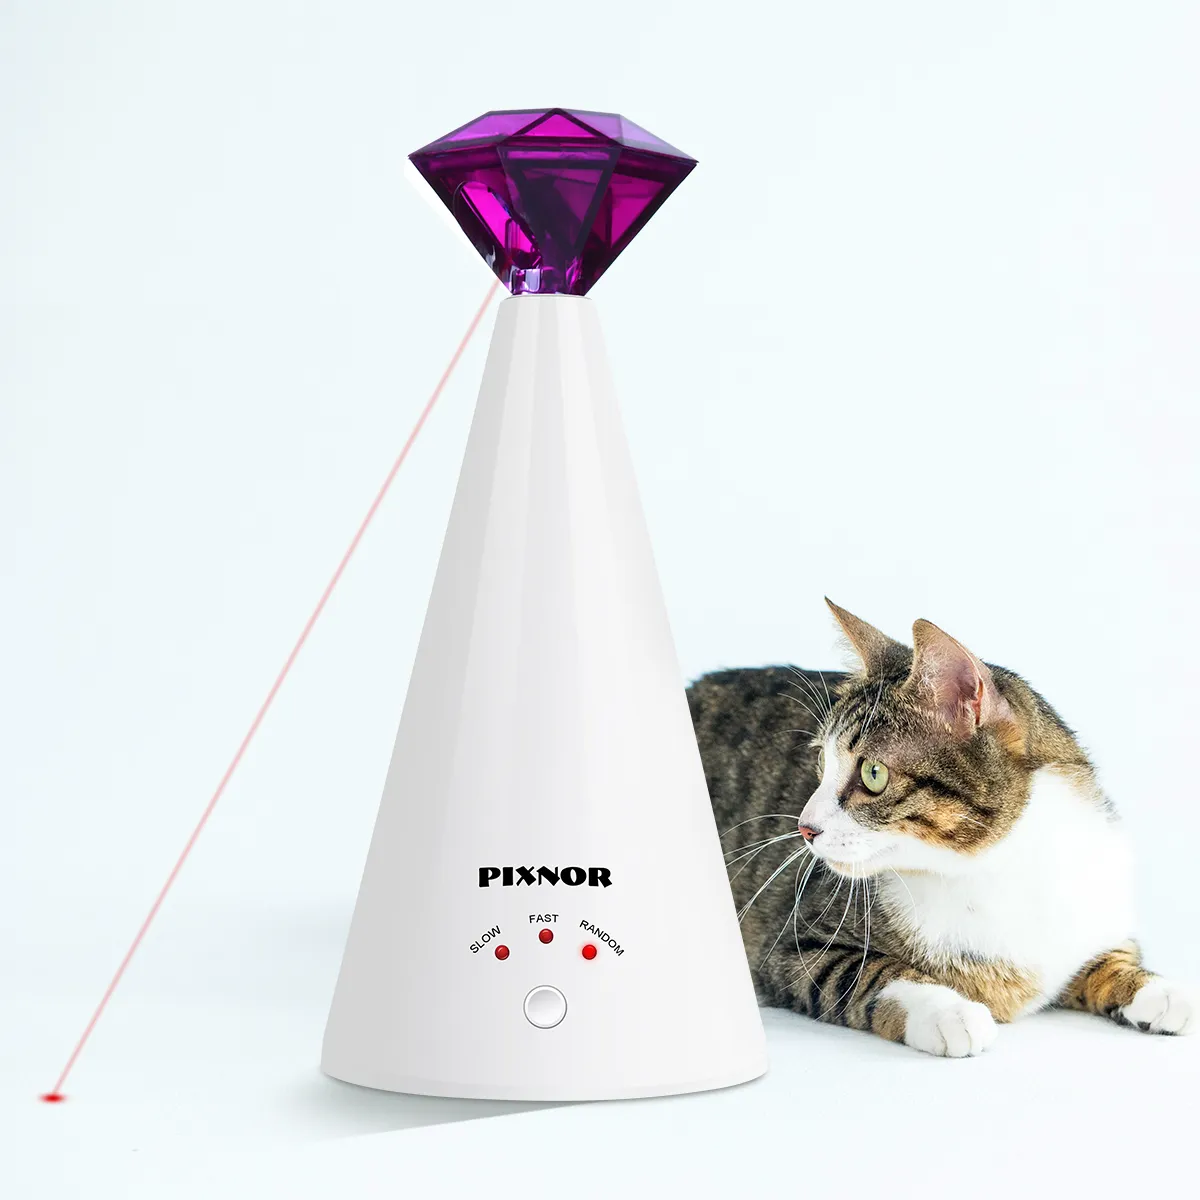 PIXNOR Smart Laser Teasing Device Electric Toy Home Interactive Cat Adjustable 3 Speeds Pet Pointer Purple 2011126806330